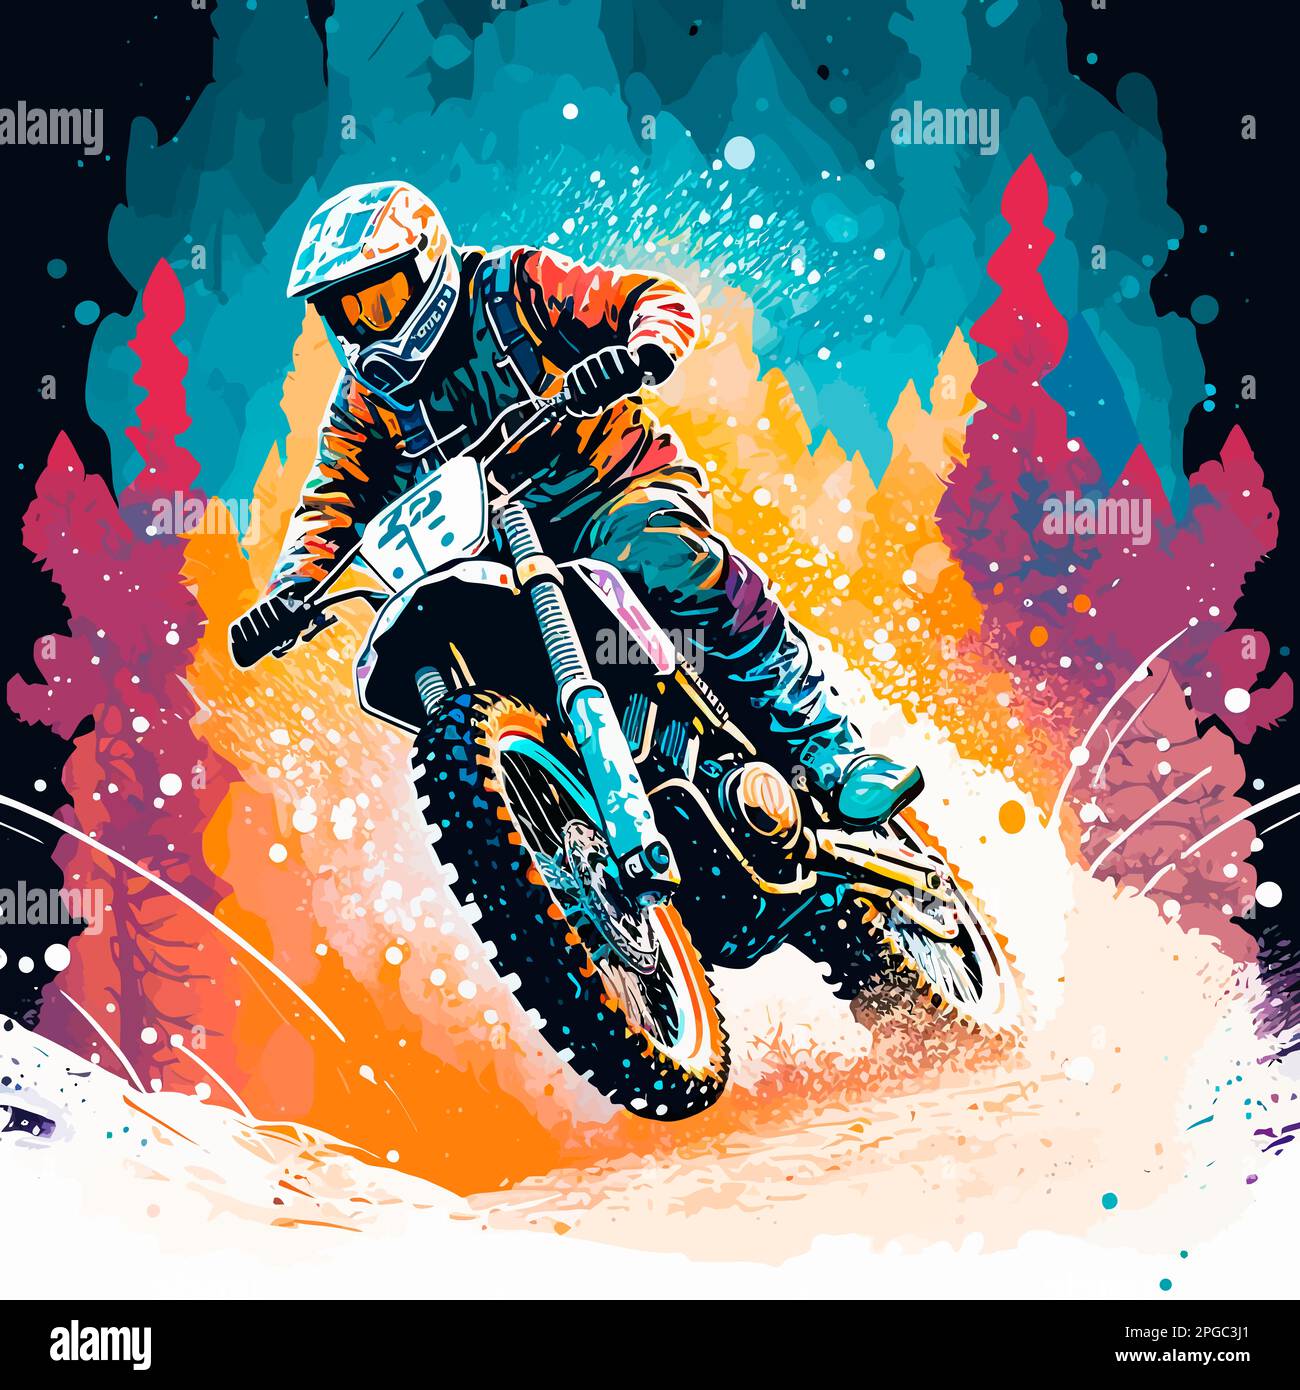 motocross jump nature dirt background illustration Stock Photo